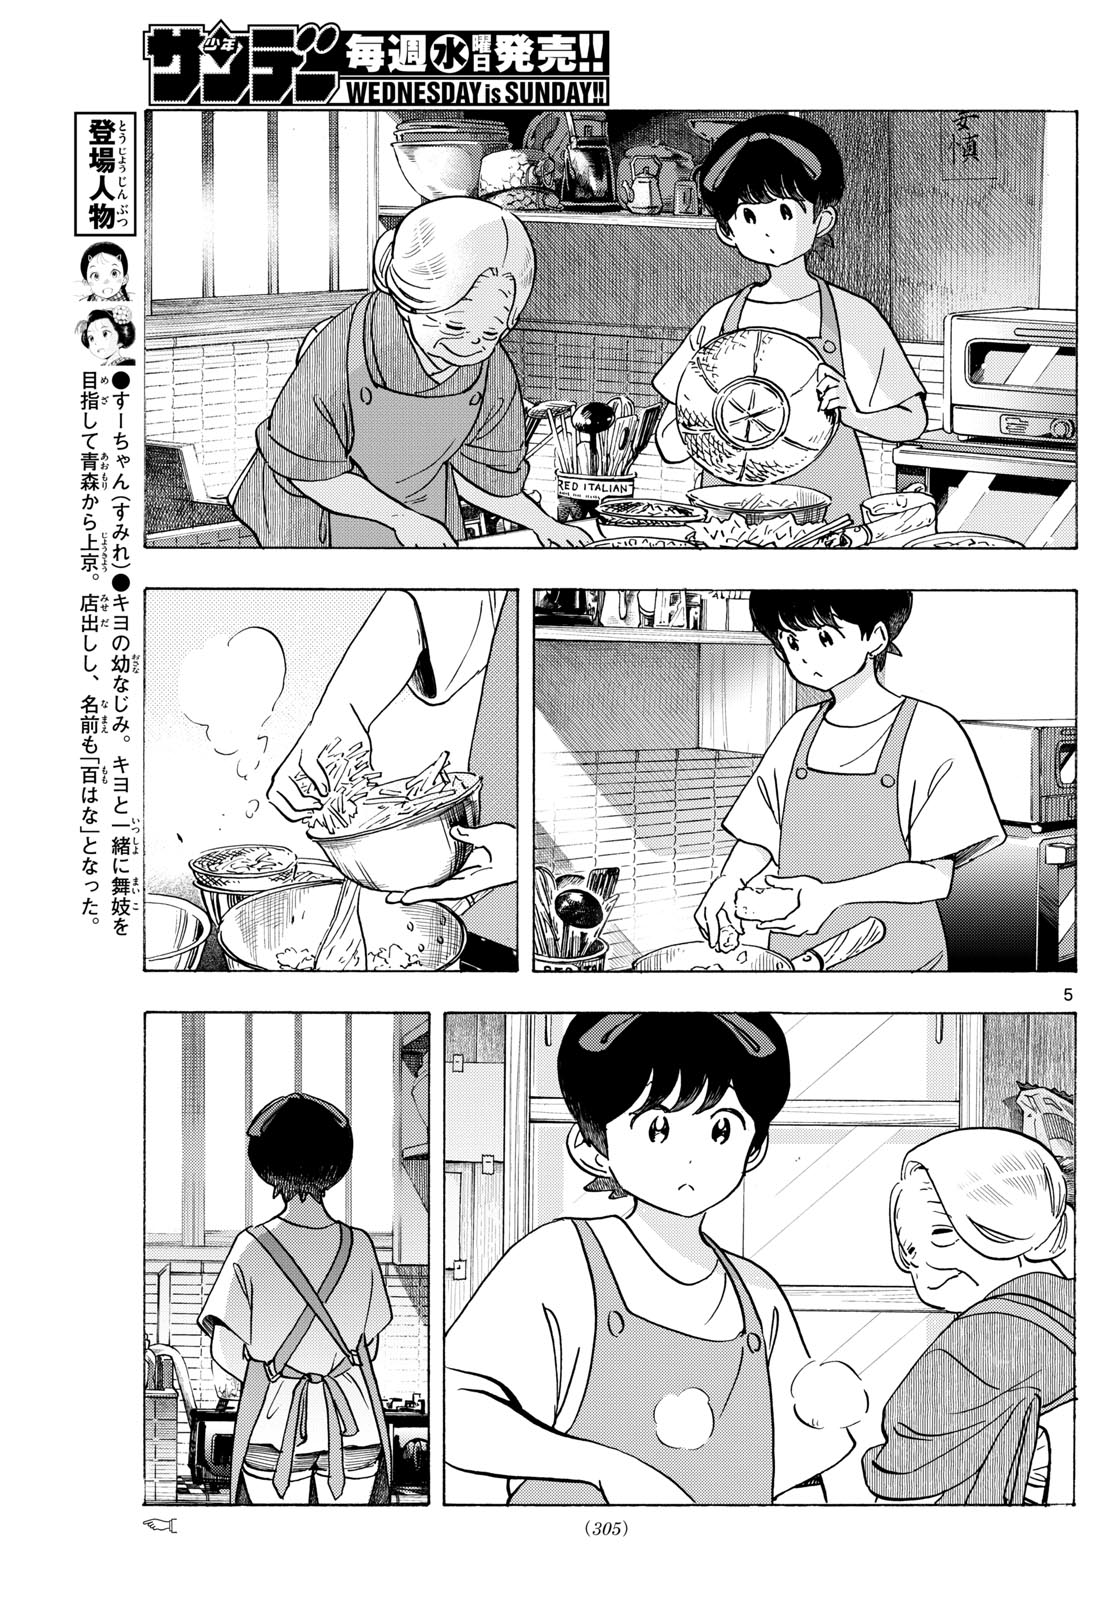 Maiko-san Chi no Makanai-san - Chapter 304 - Page 5